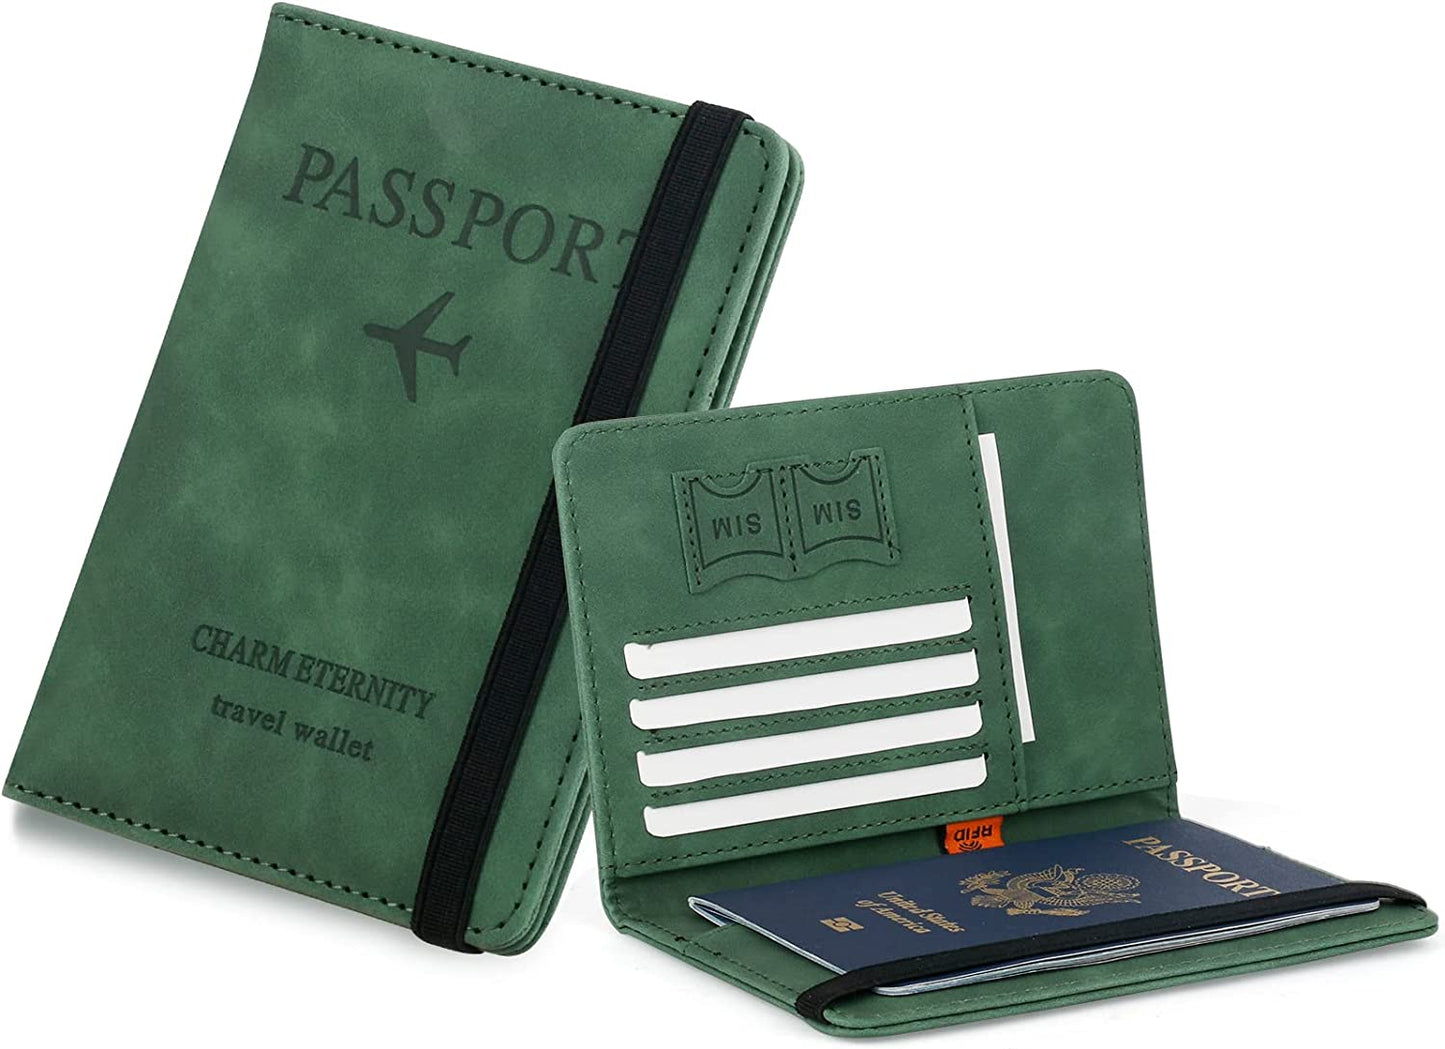 Passport Holder Travel Essentials, Passport Wallet RFID Blocking for Men Women, Multifunction Travel Document Holder, PU Leather Card Case Cover with Elastic Band Closure